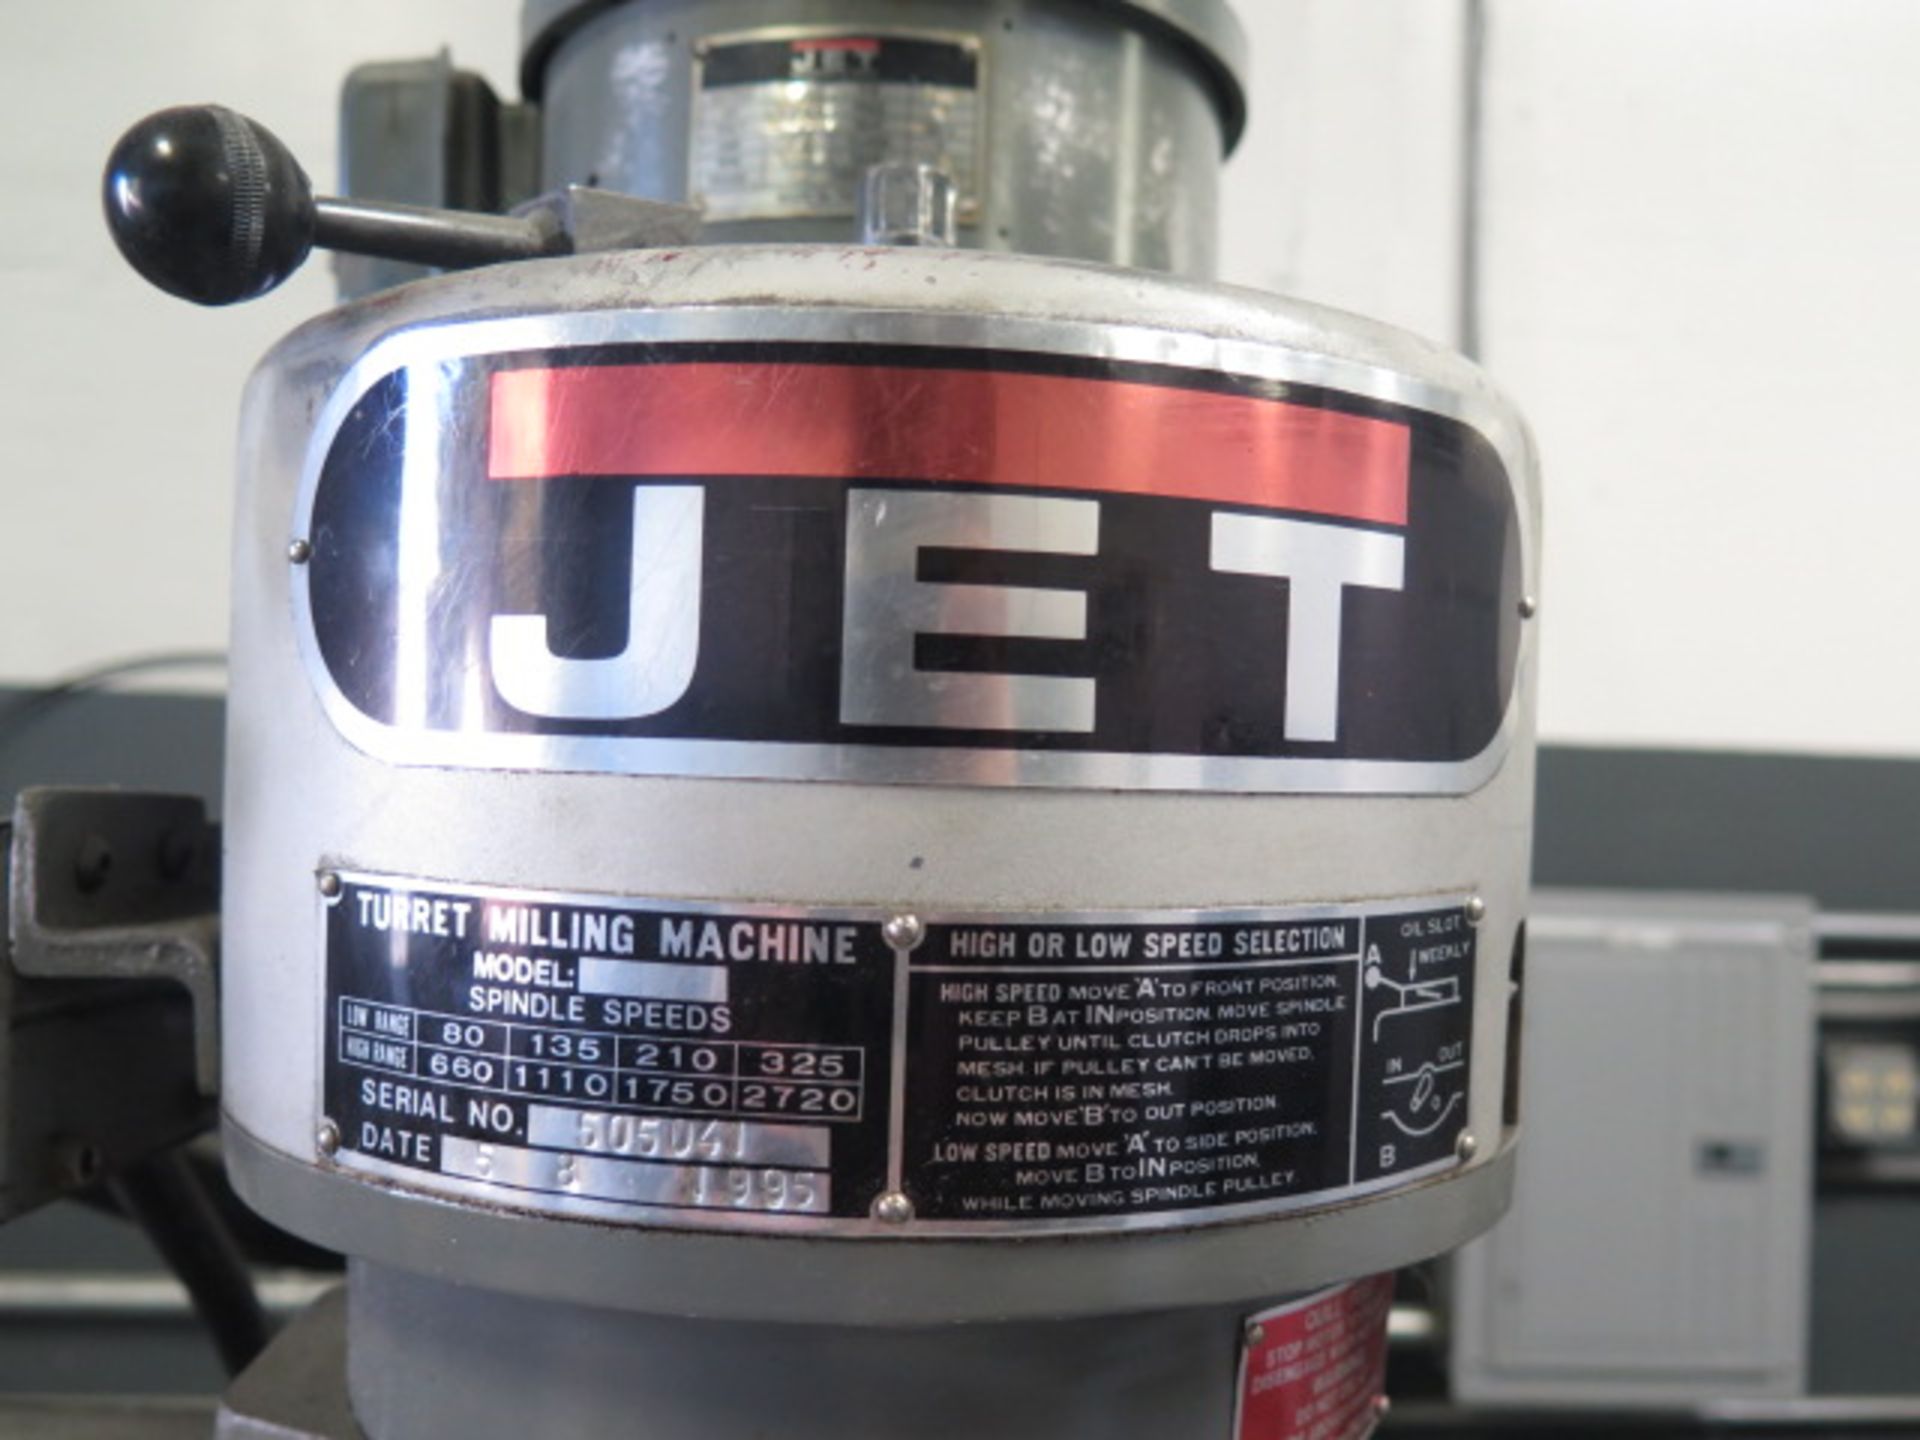 Jet JTM-2 Vertical Mill s/n 505041 w/ Acu-Rite MillMate DRO, 2Hp Motor, 80-2720 RPM, Chrome Ways, - Image 3 of 12